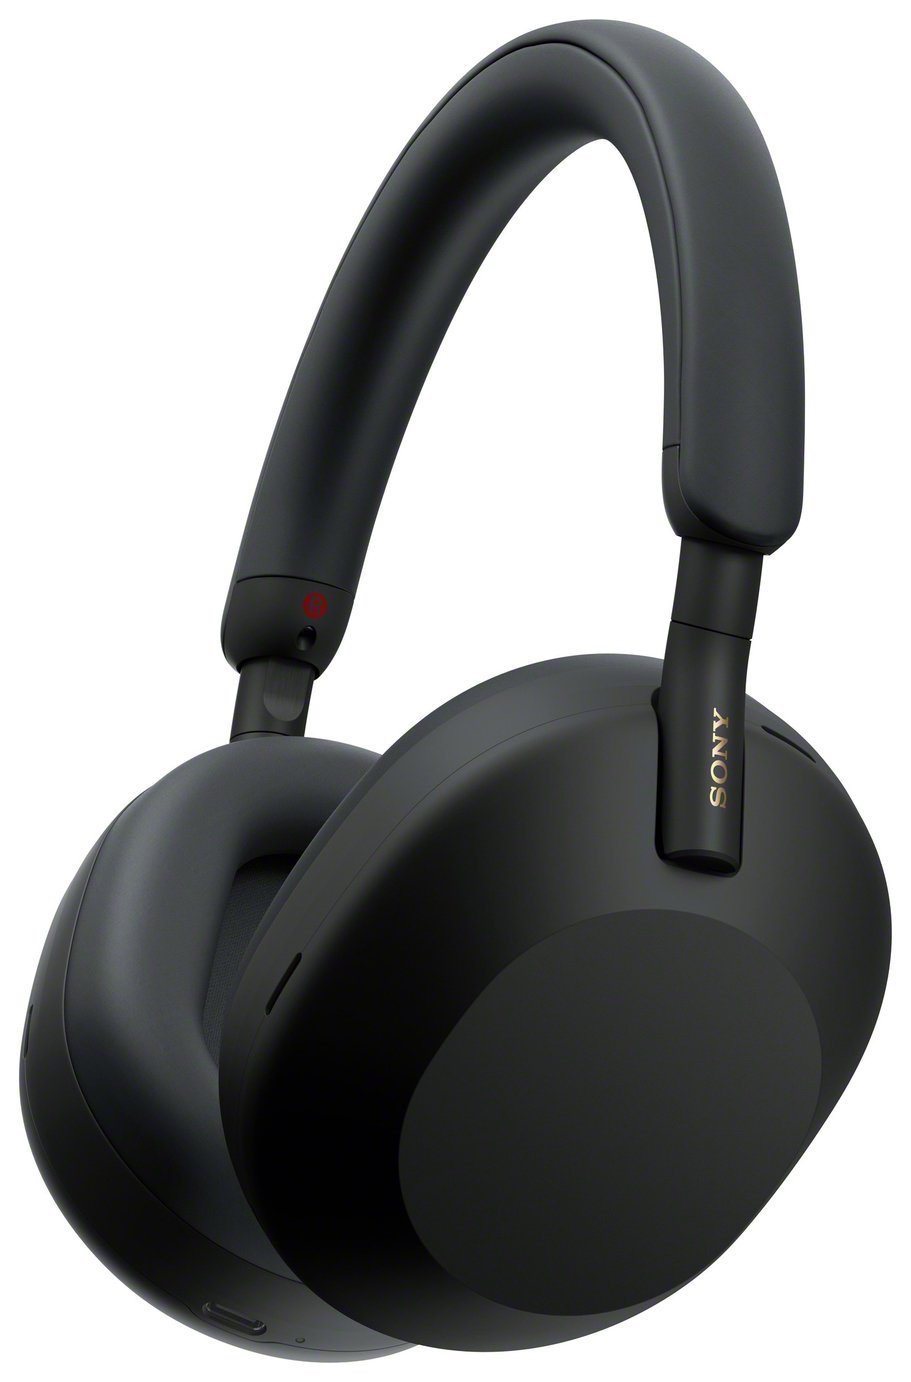 Sony WH-1000XM5 Over-Ear True Wireless Headphones - Black